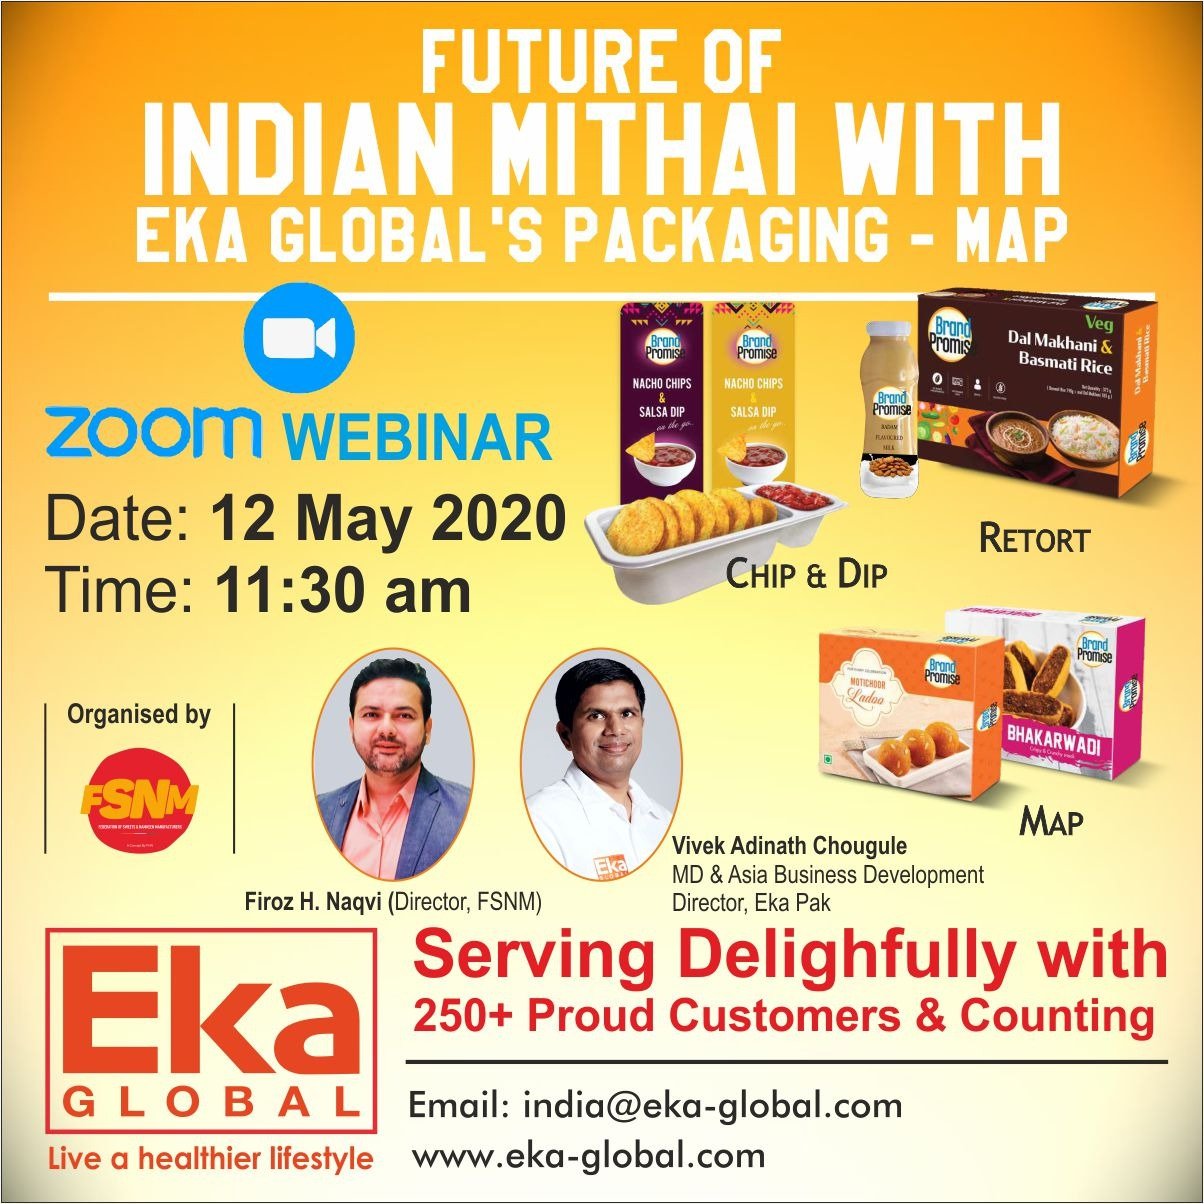 Eka Global India outreach with Webinars